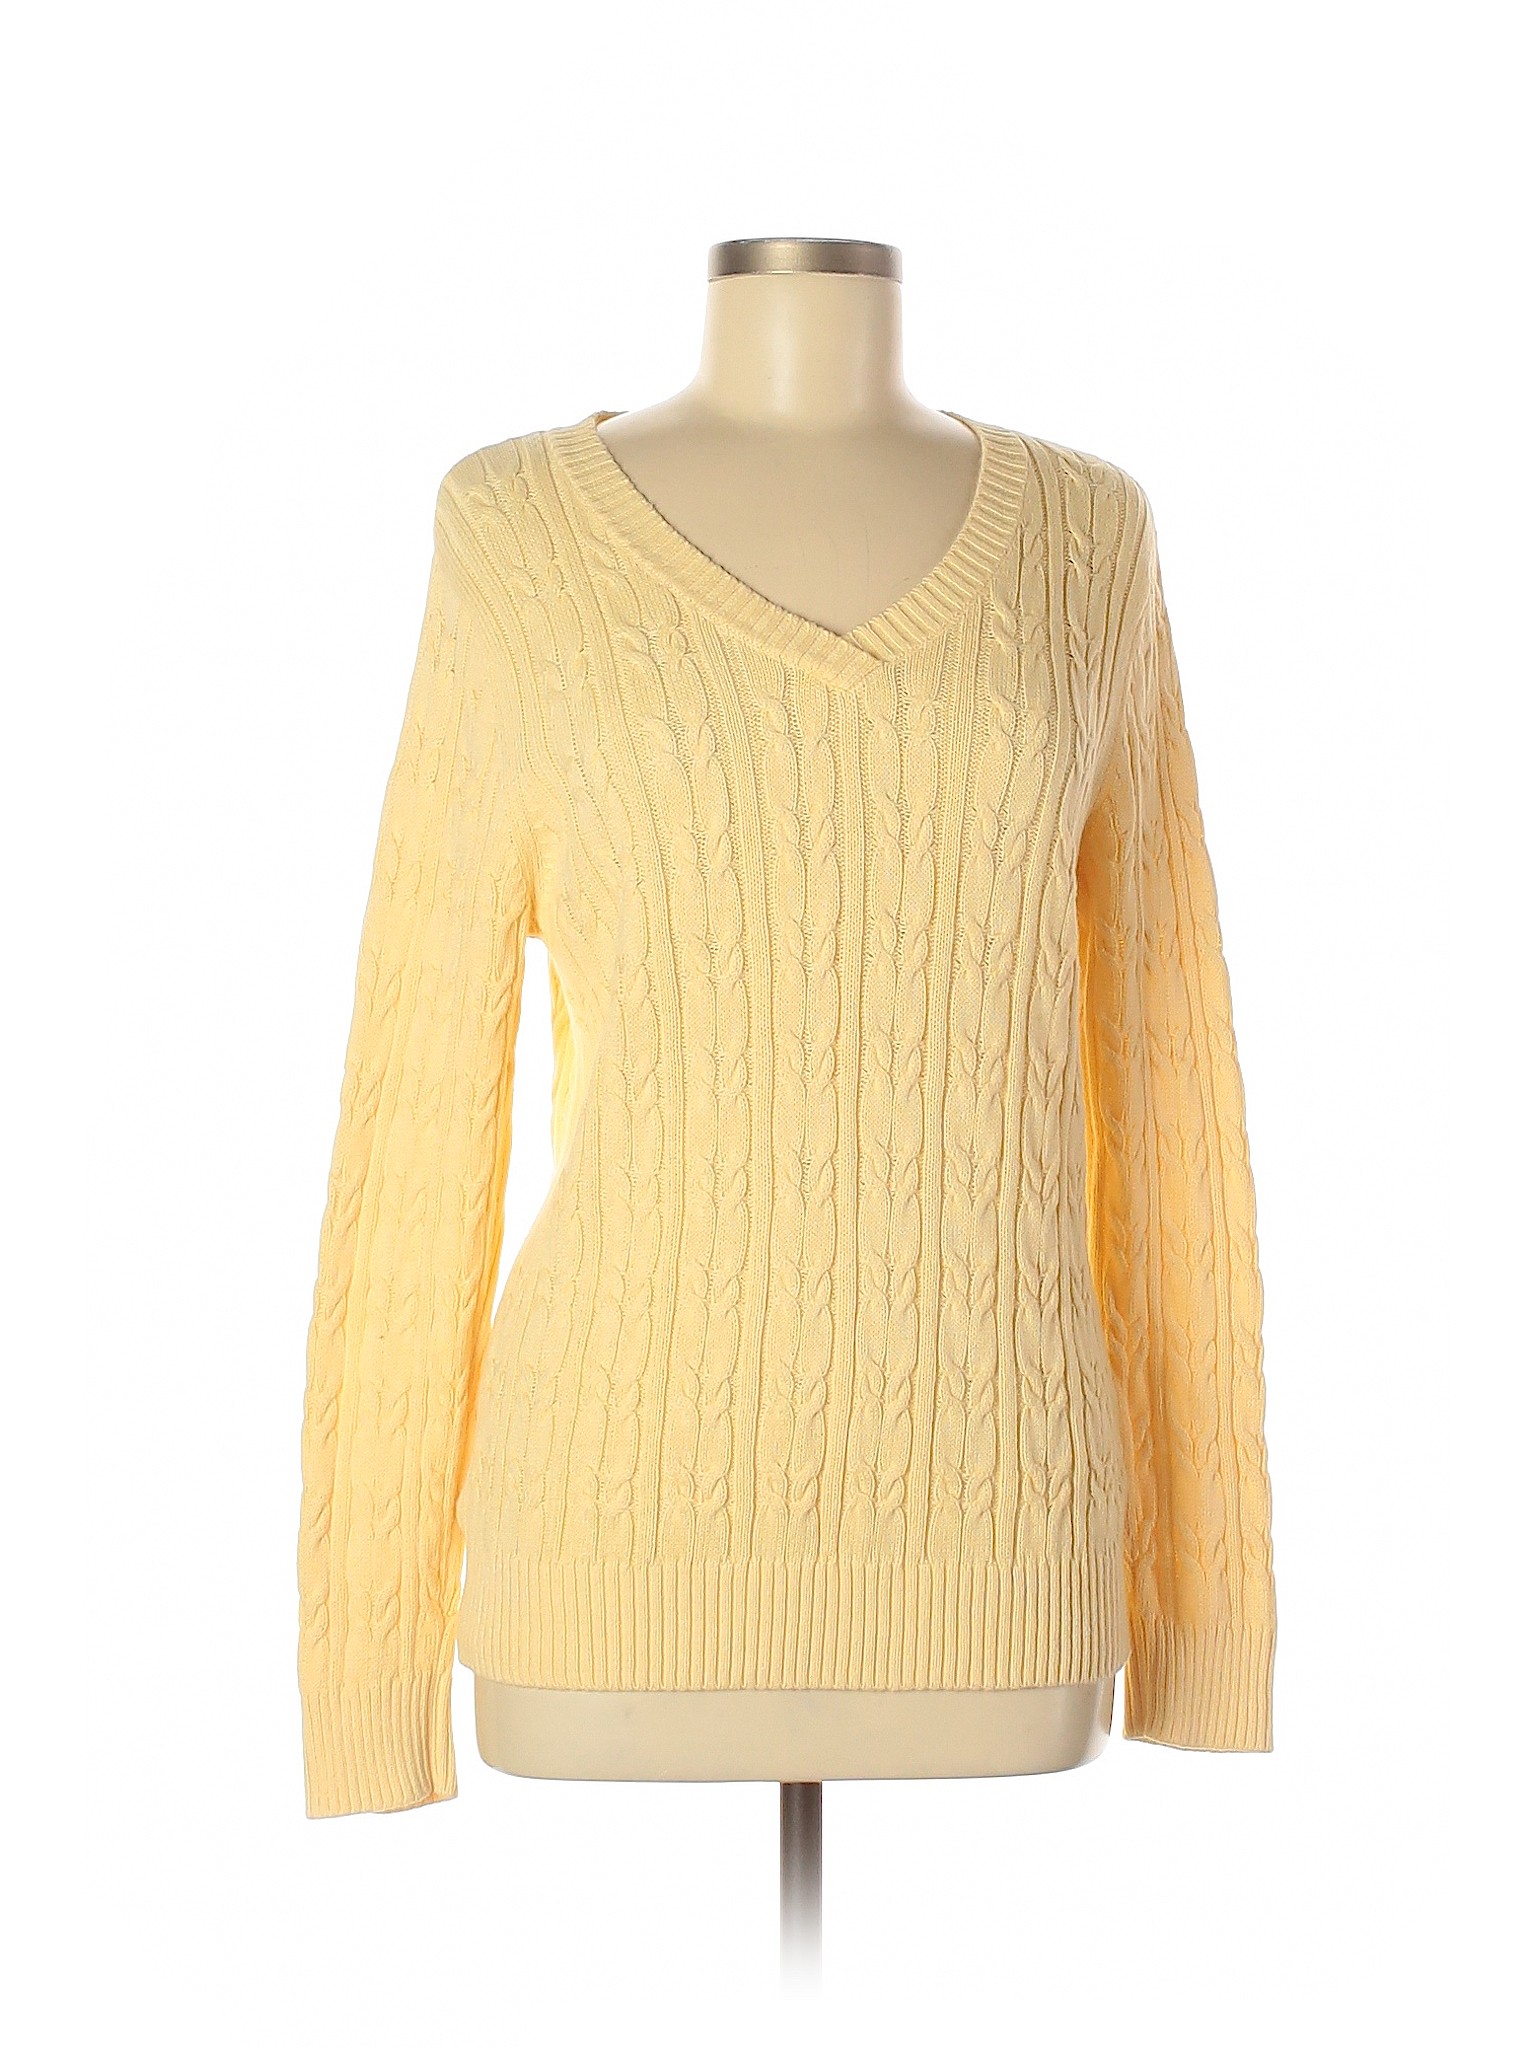 Croft & Barrow Women Yellow Pullover Sweater M | eBay